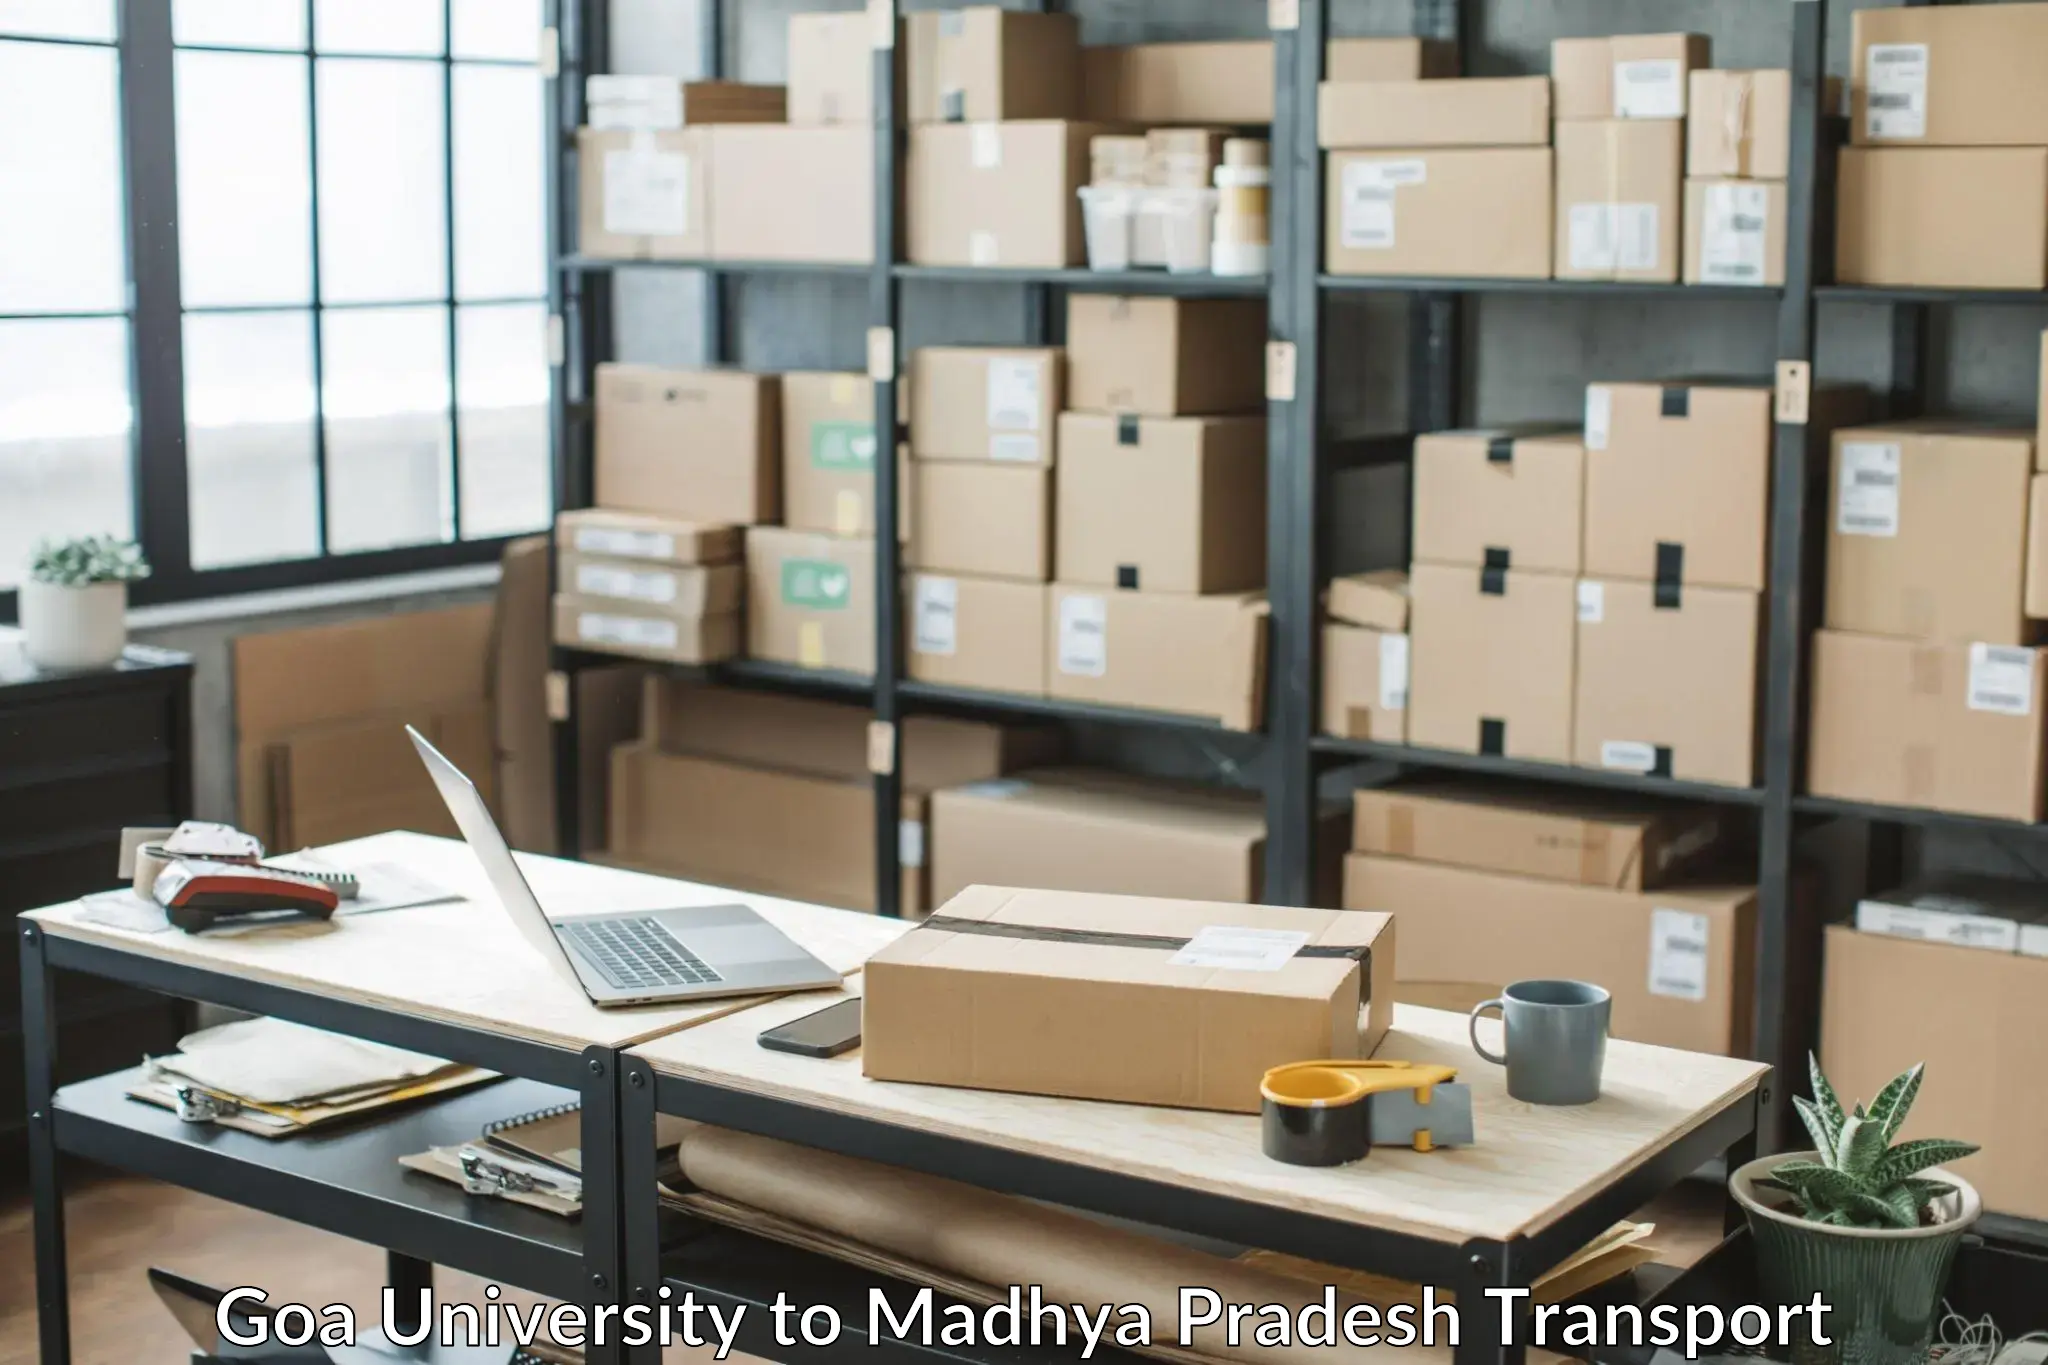 Lorry transport service Goa University to Nagod